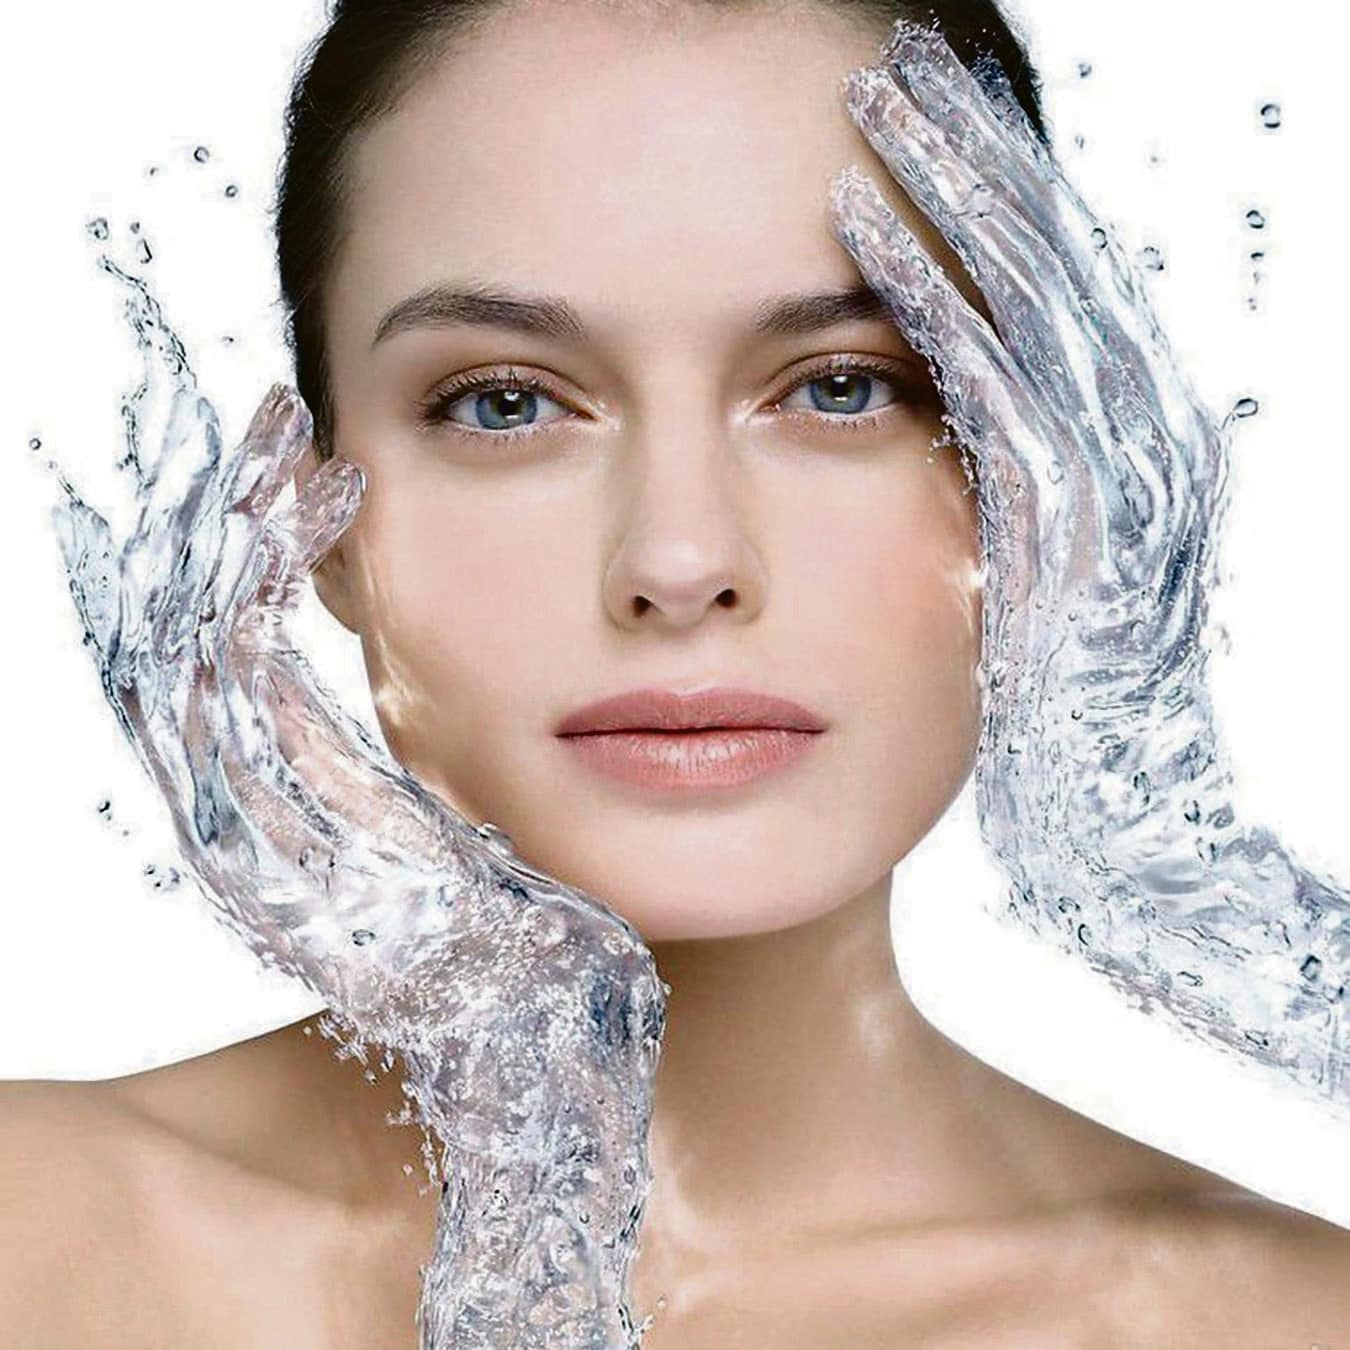 Aquapure, el sistema del cuidado facial inteligente llega a